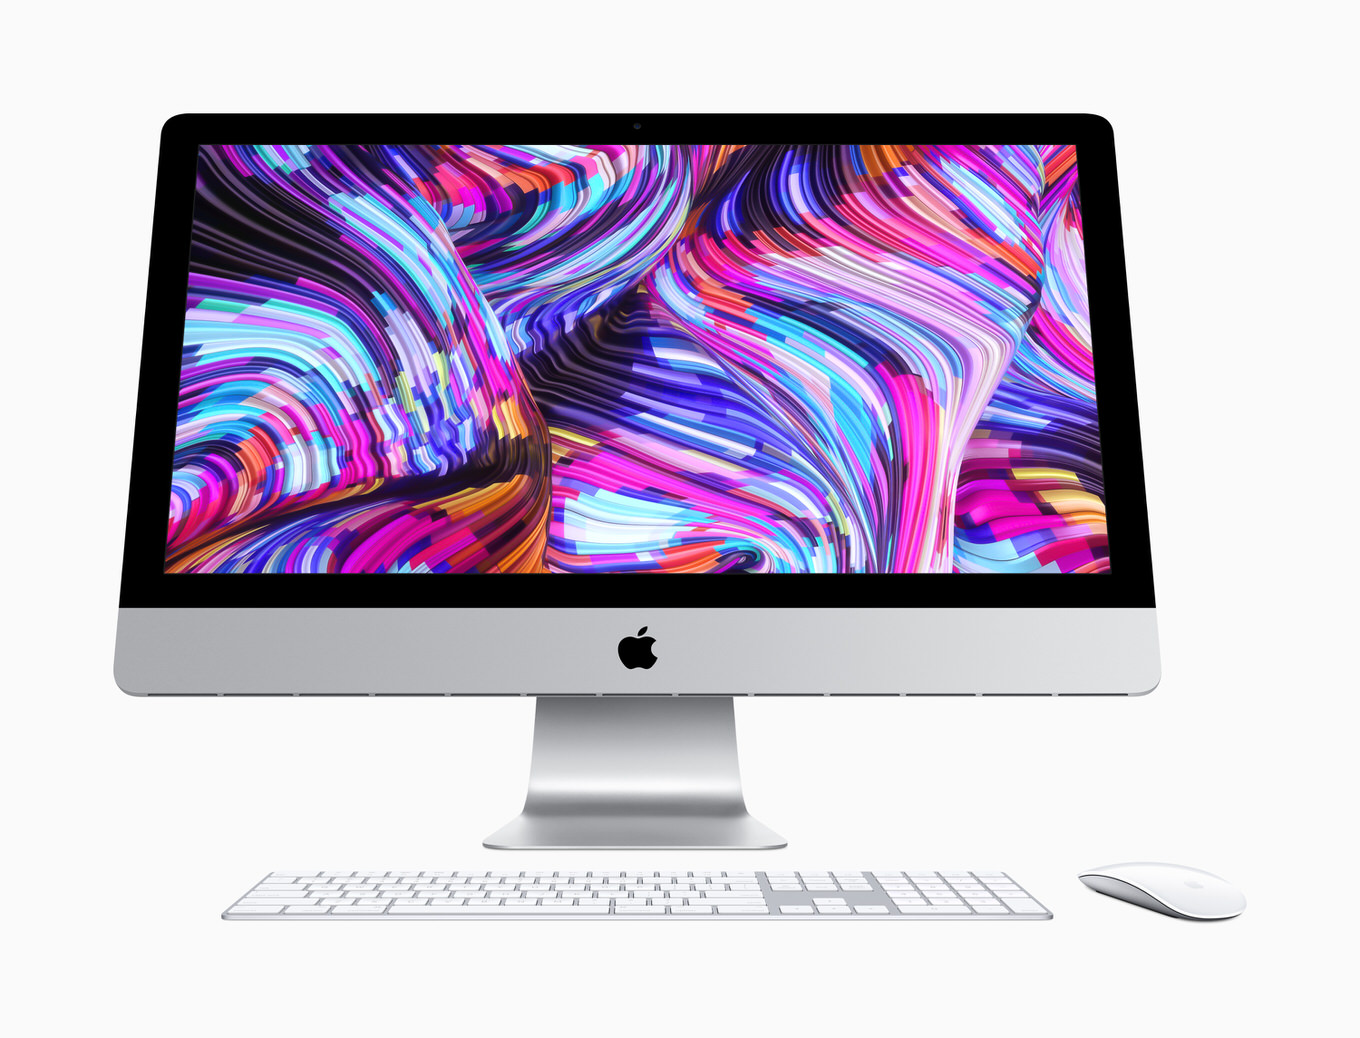 Apple-iMac-gets-2x-more-performance-03192019